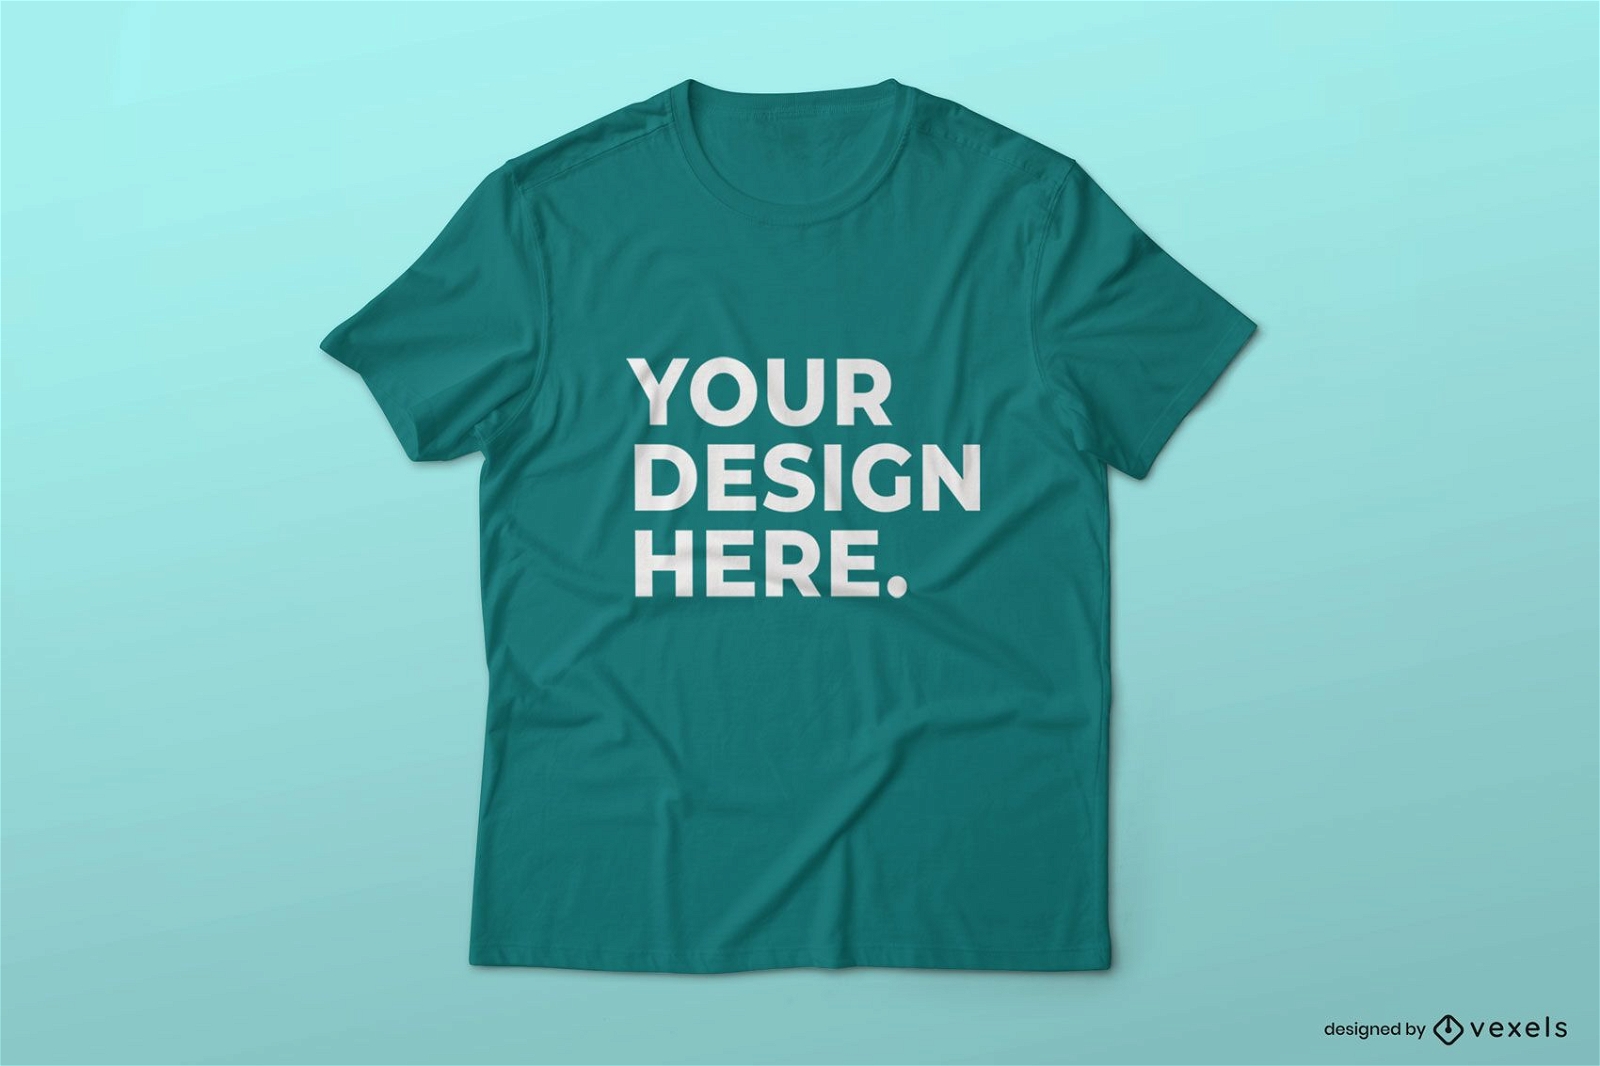 Simple t-shirt mockup design